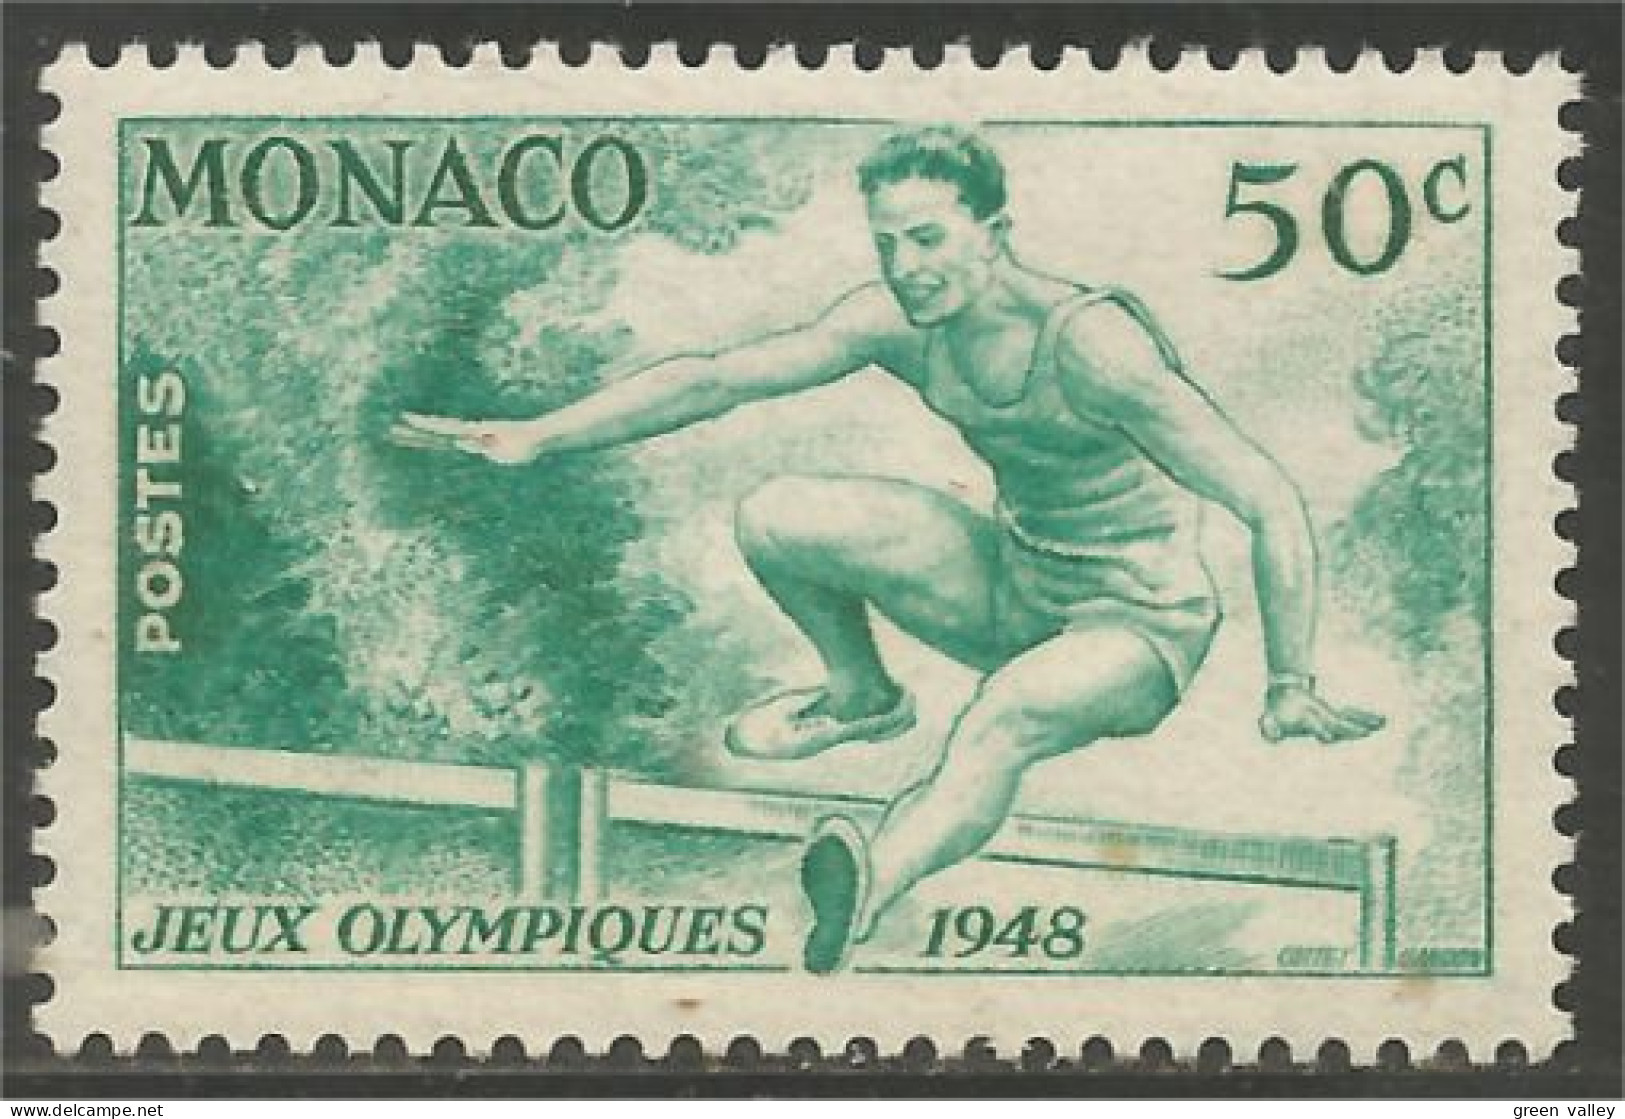 630 Monaco 1948 Yv 319 Athlétisme Course Haies Hurdles Running MH * Neuf (MON-240b) - Sommer 1948: London